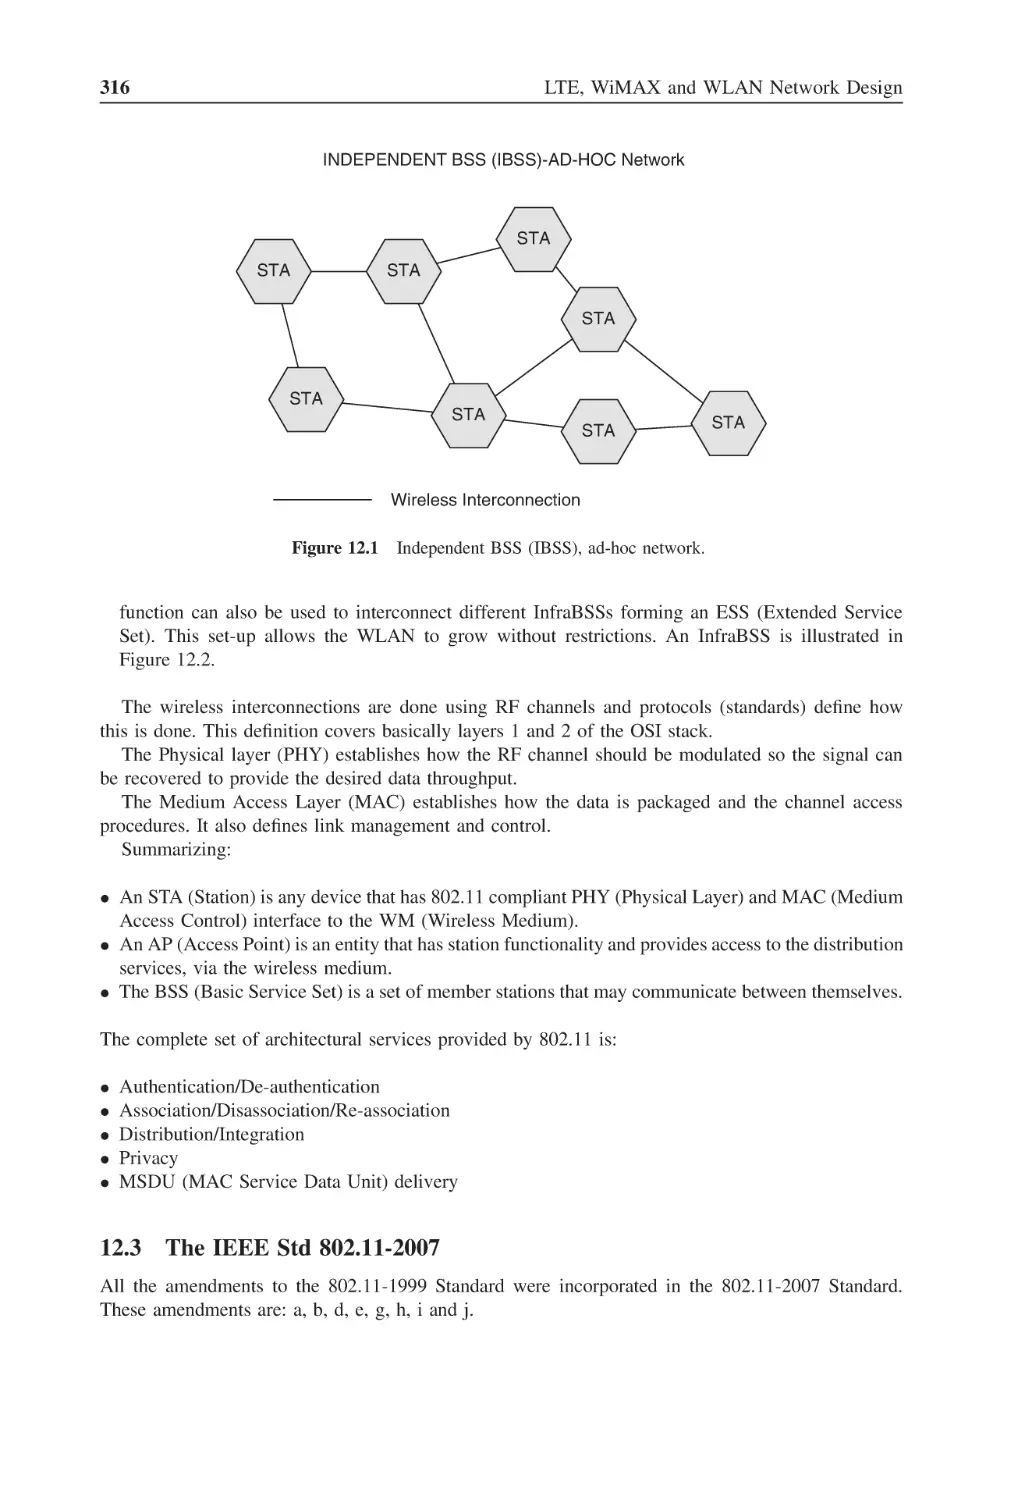 12.3 The IEEE Std 802.11-2007